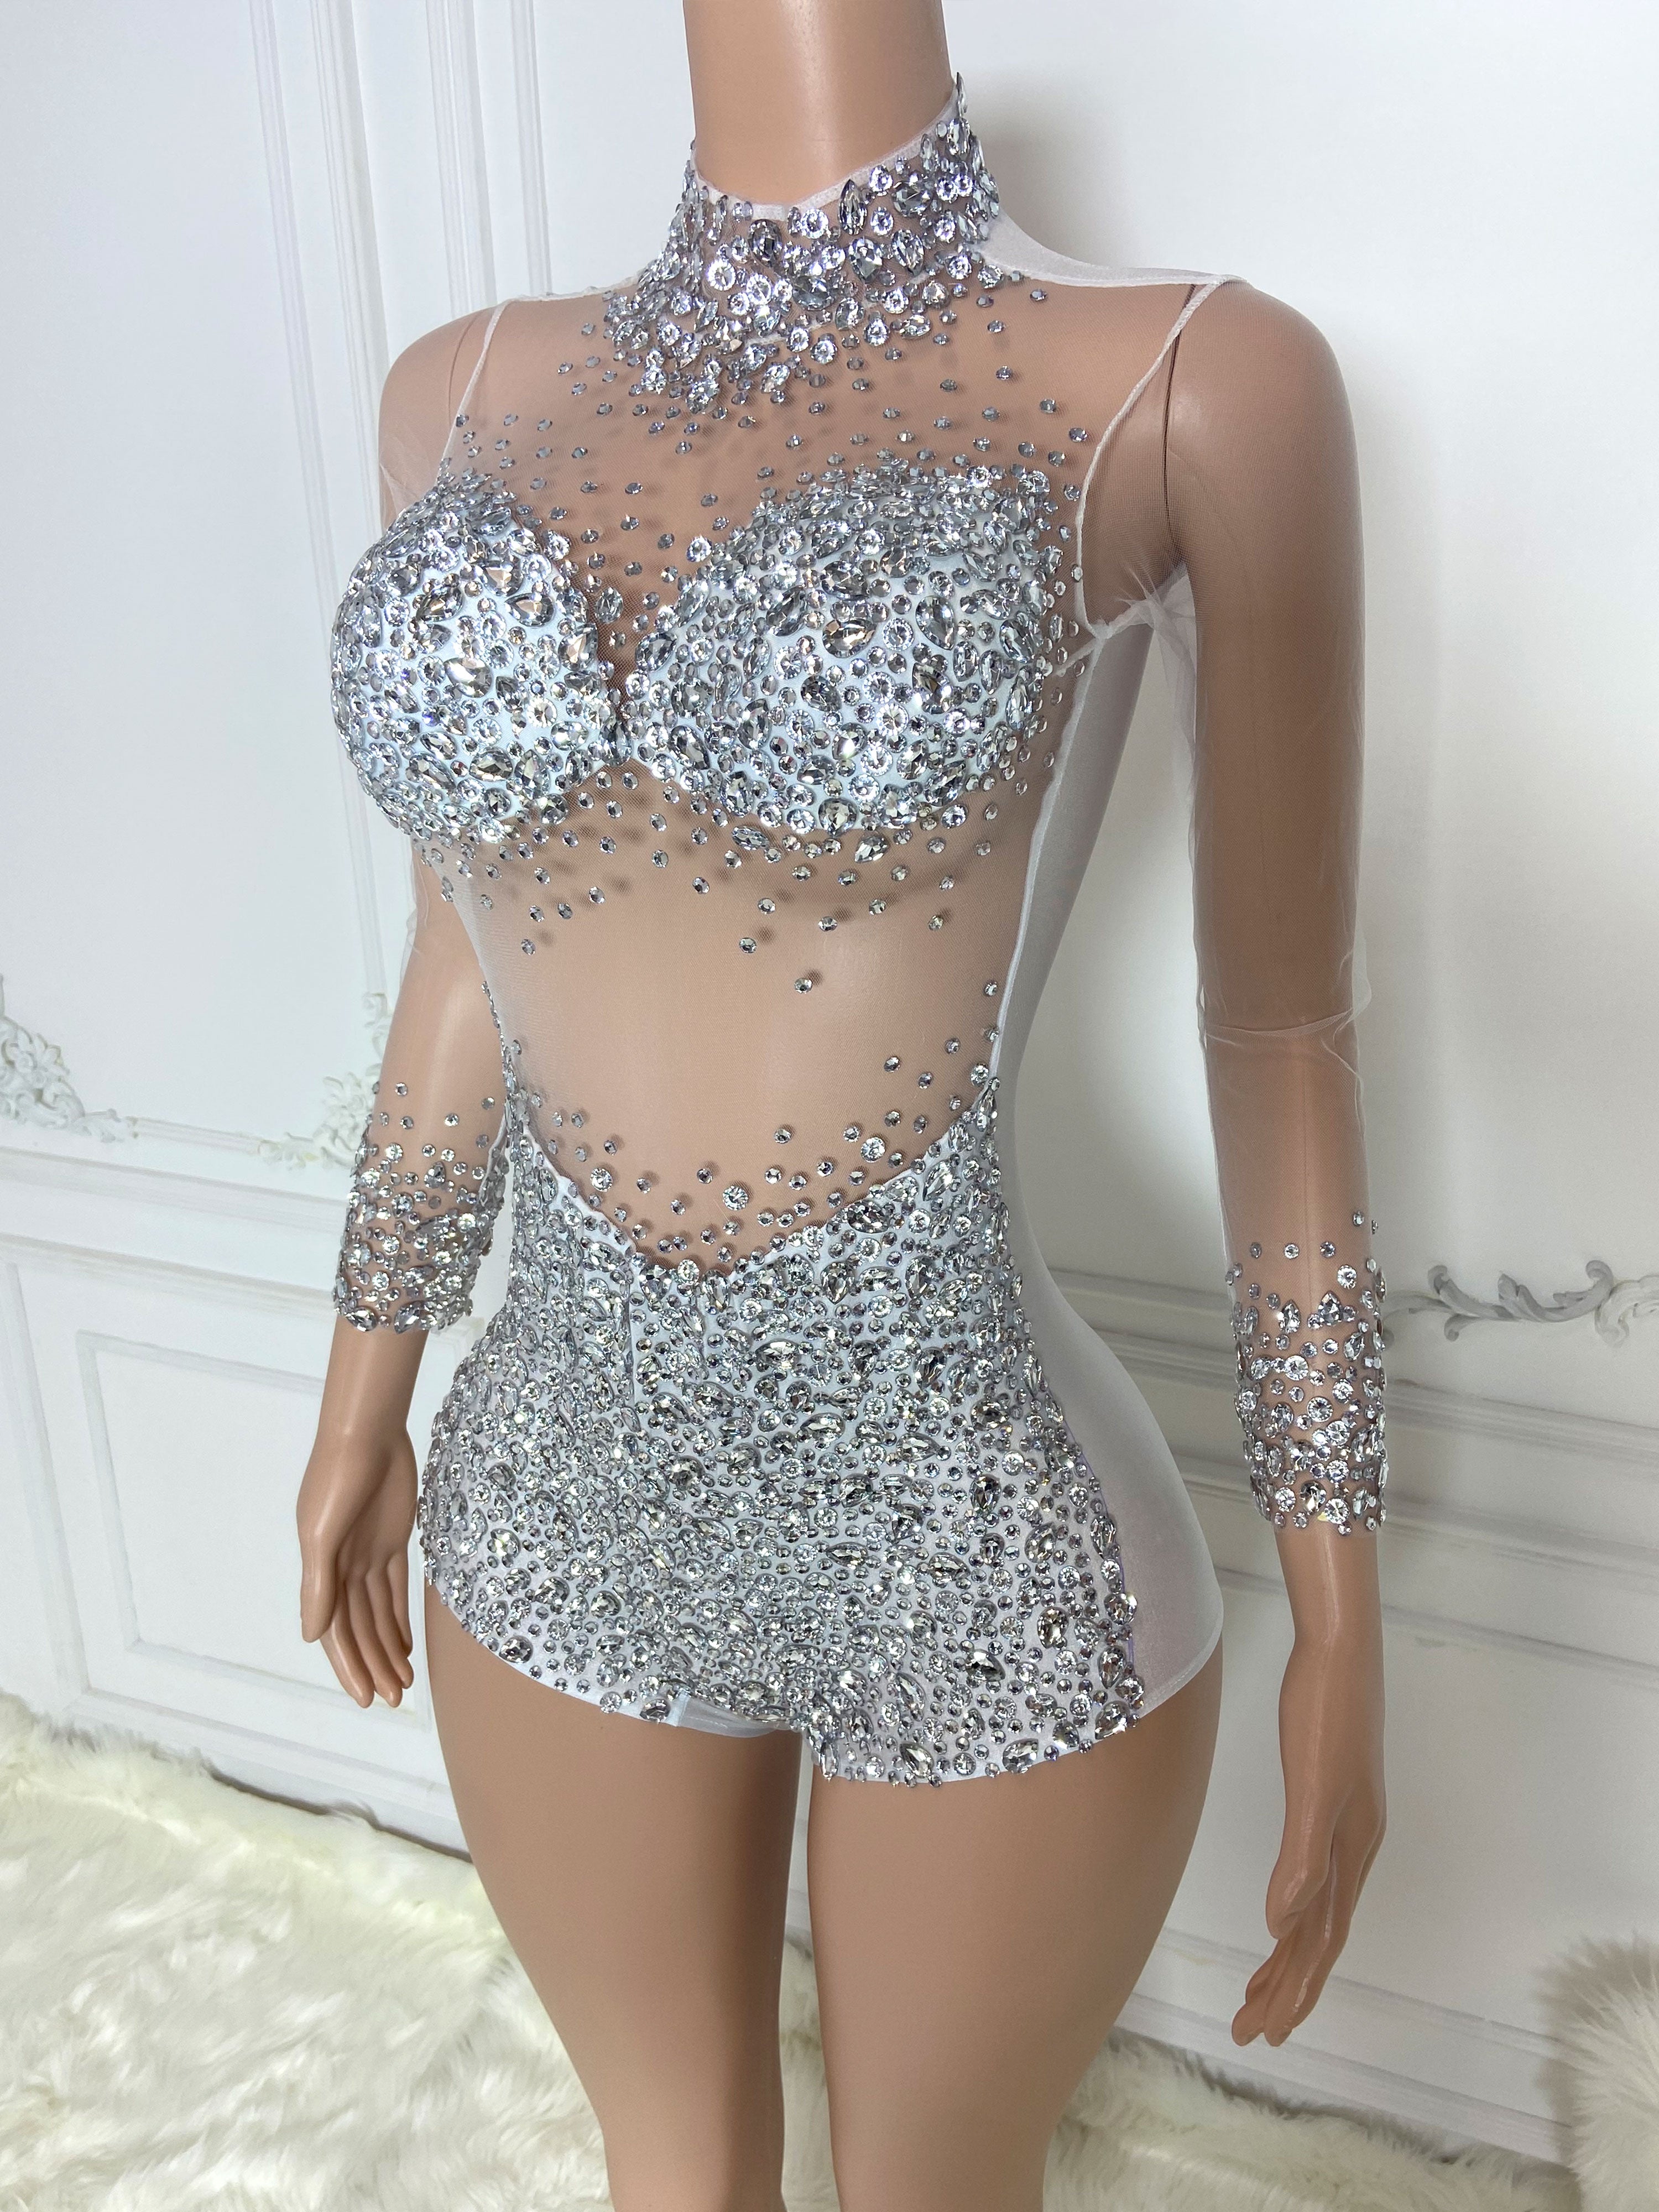 Silver Diamond Cut Sequin Bodysuit with Mesh Insert